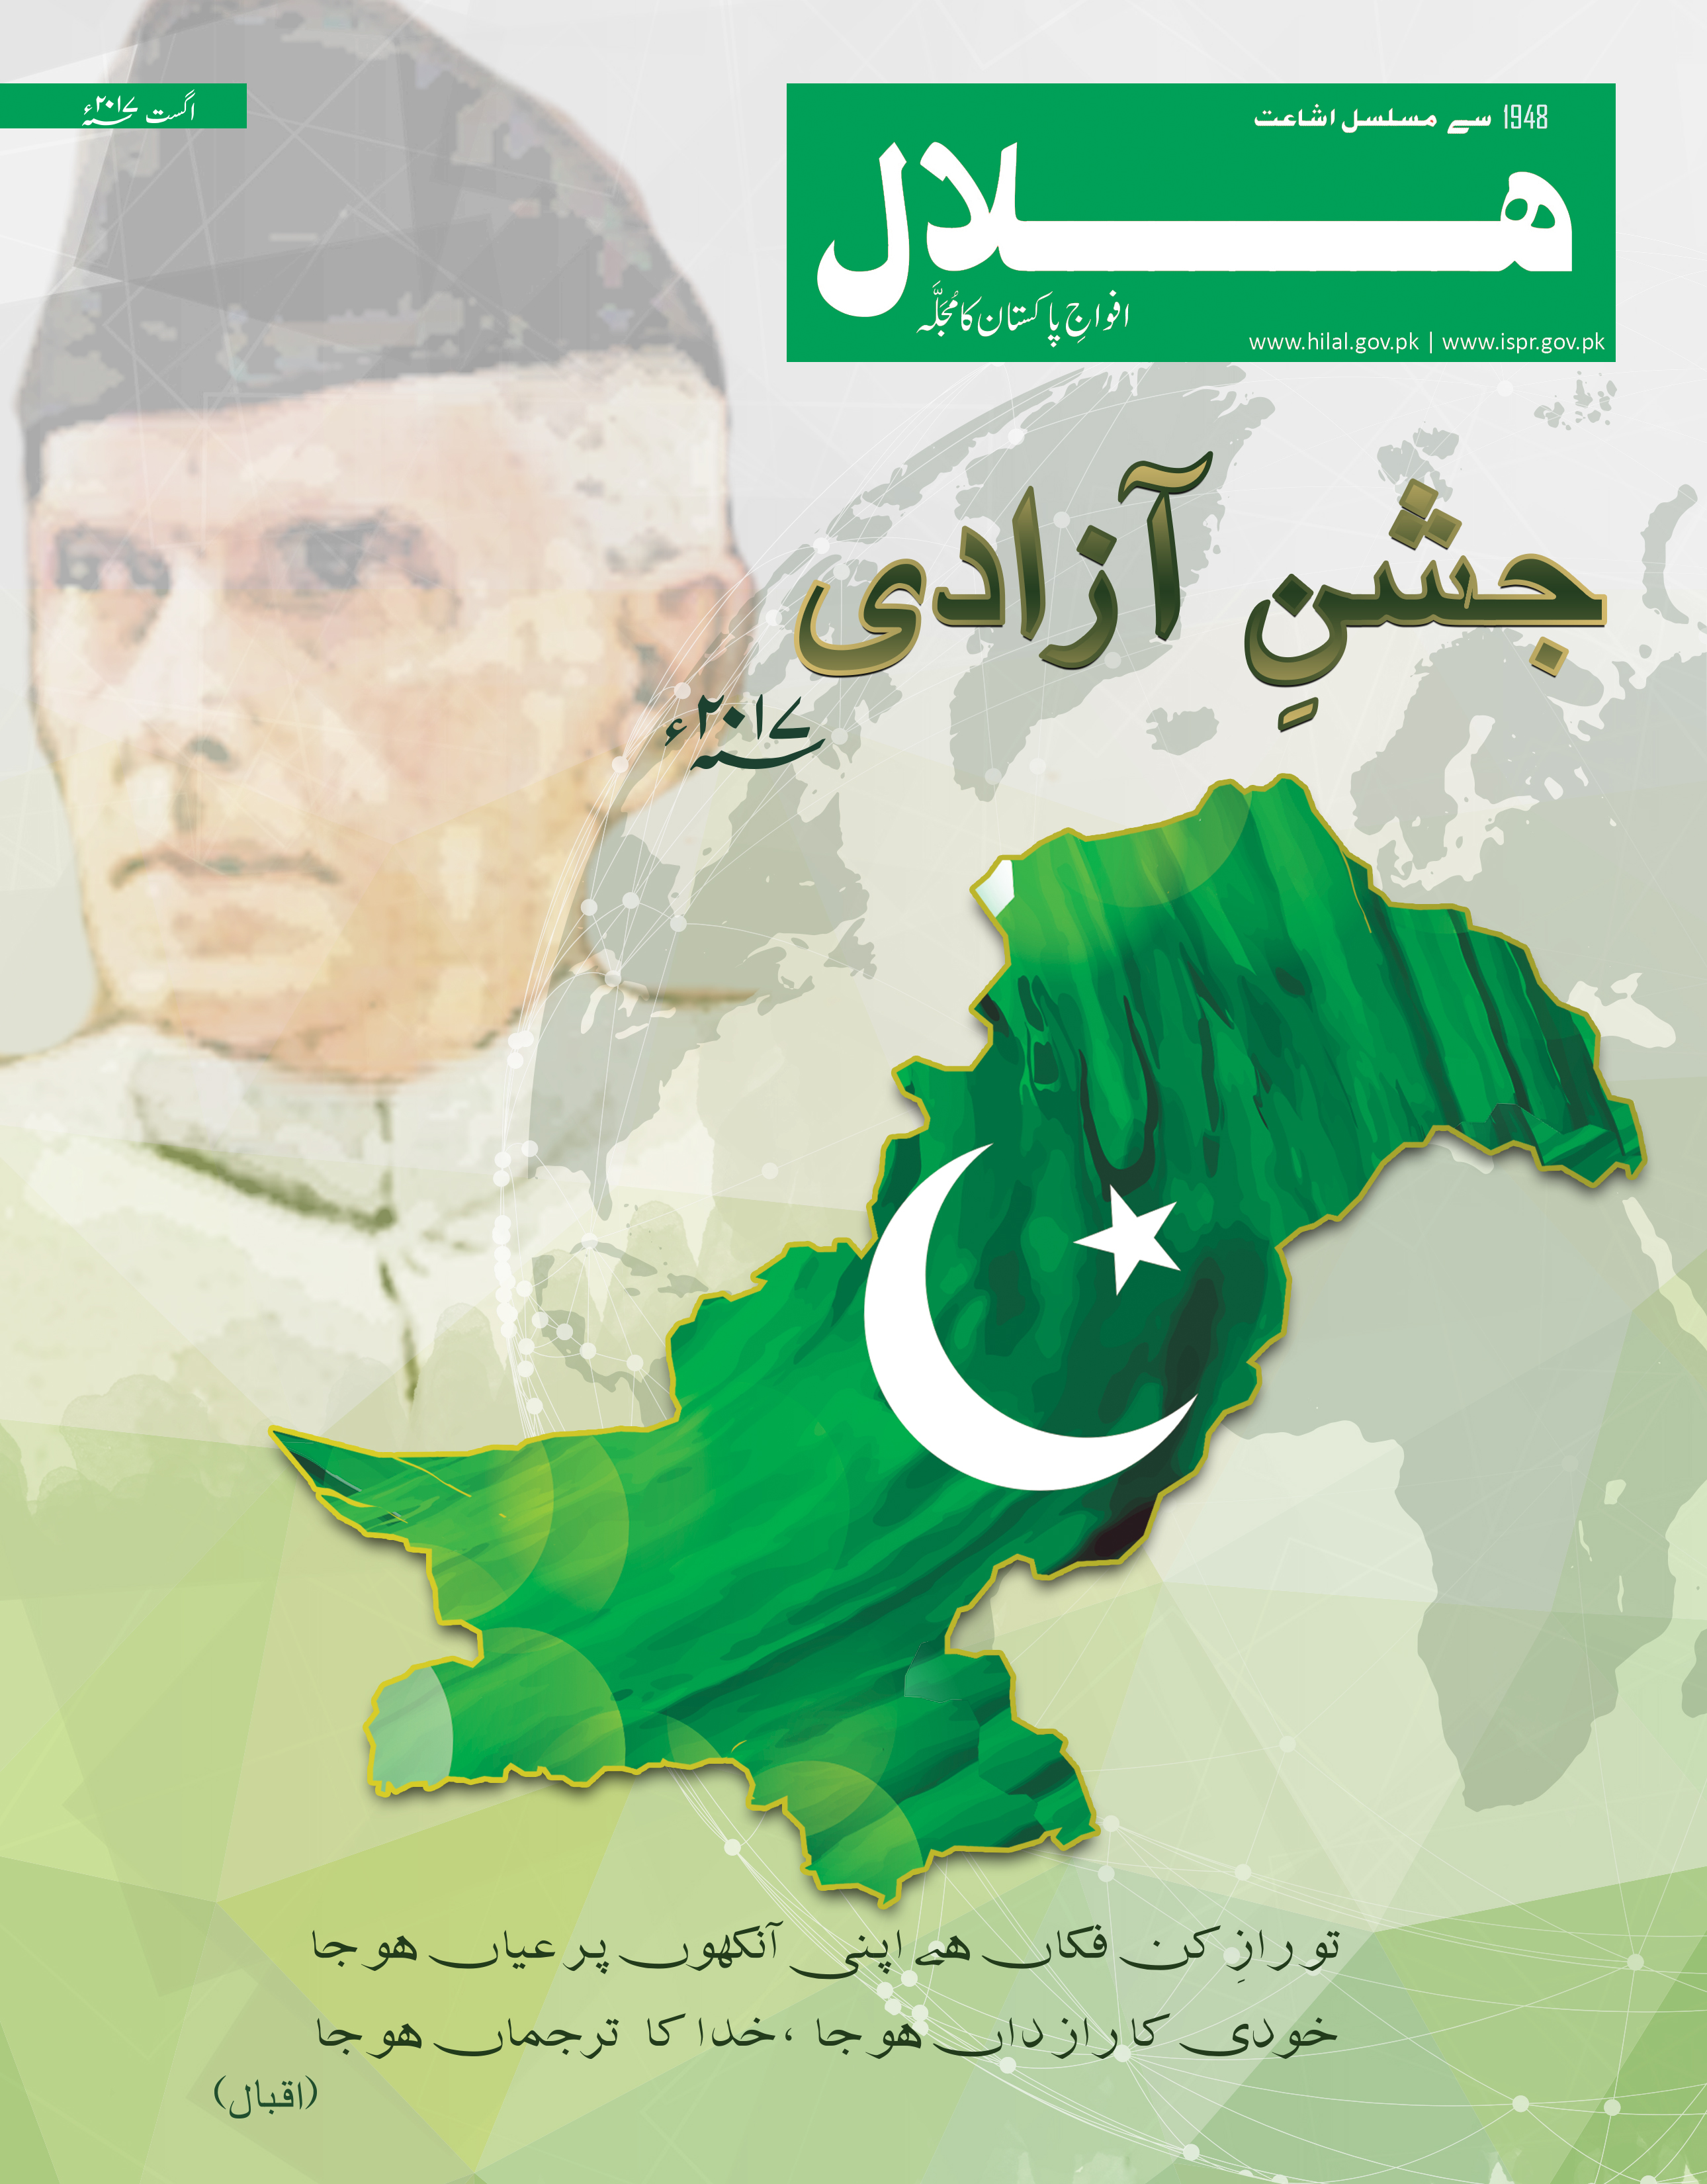 Hilal Urdu August 2017